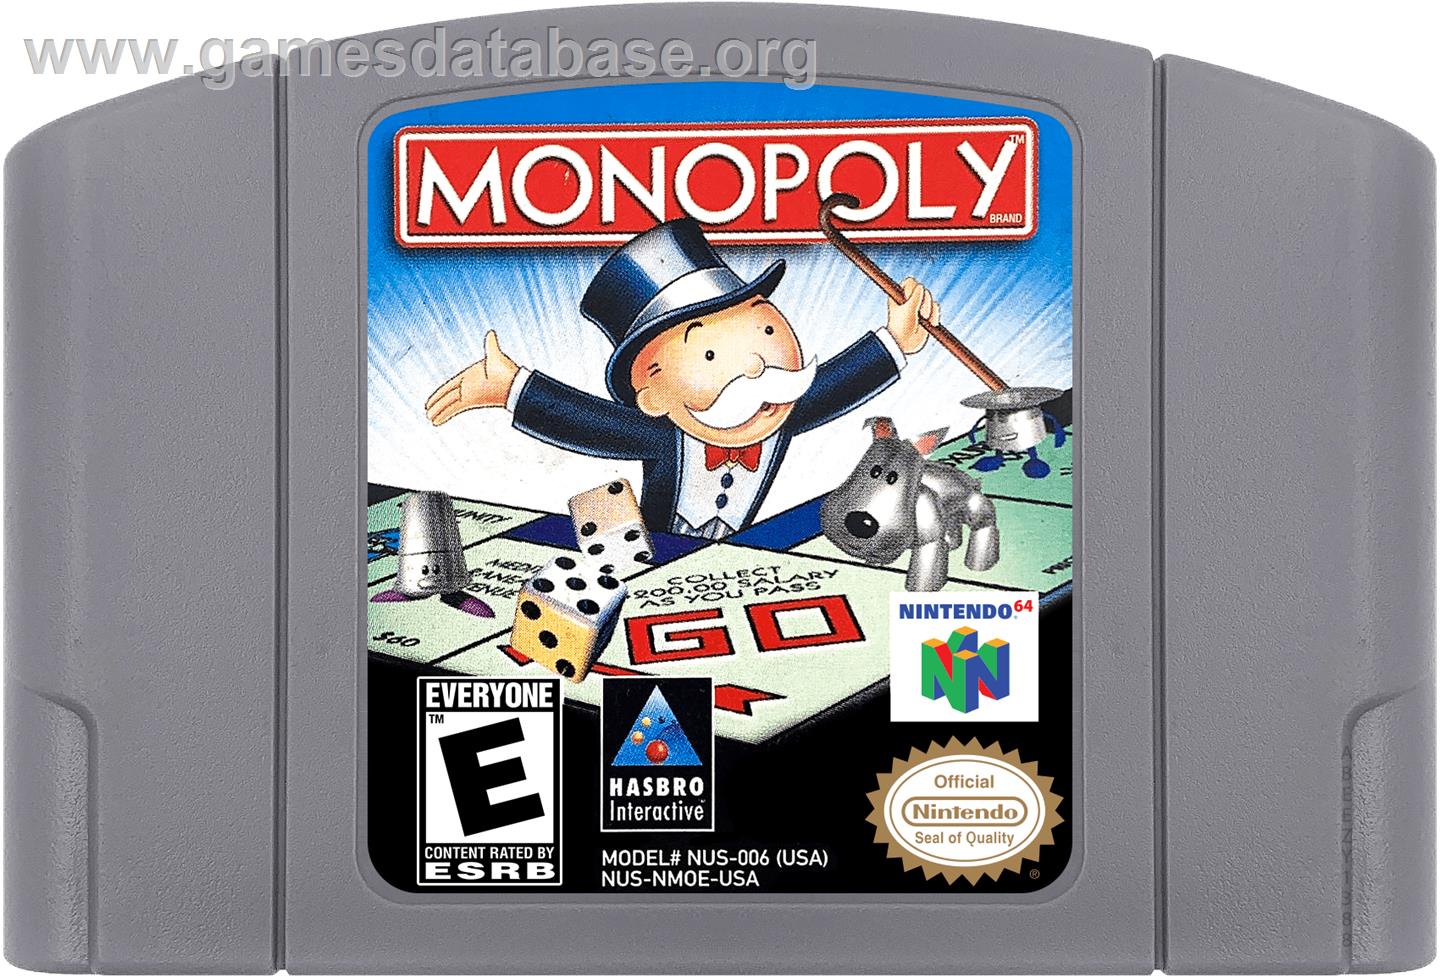 Monopoly - Nintendo N64 - Artwork - Cartridge